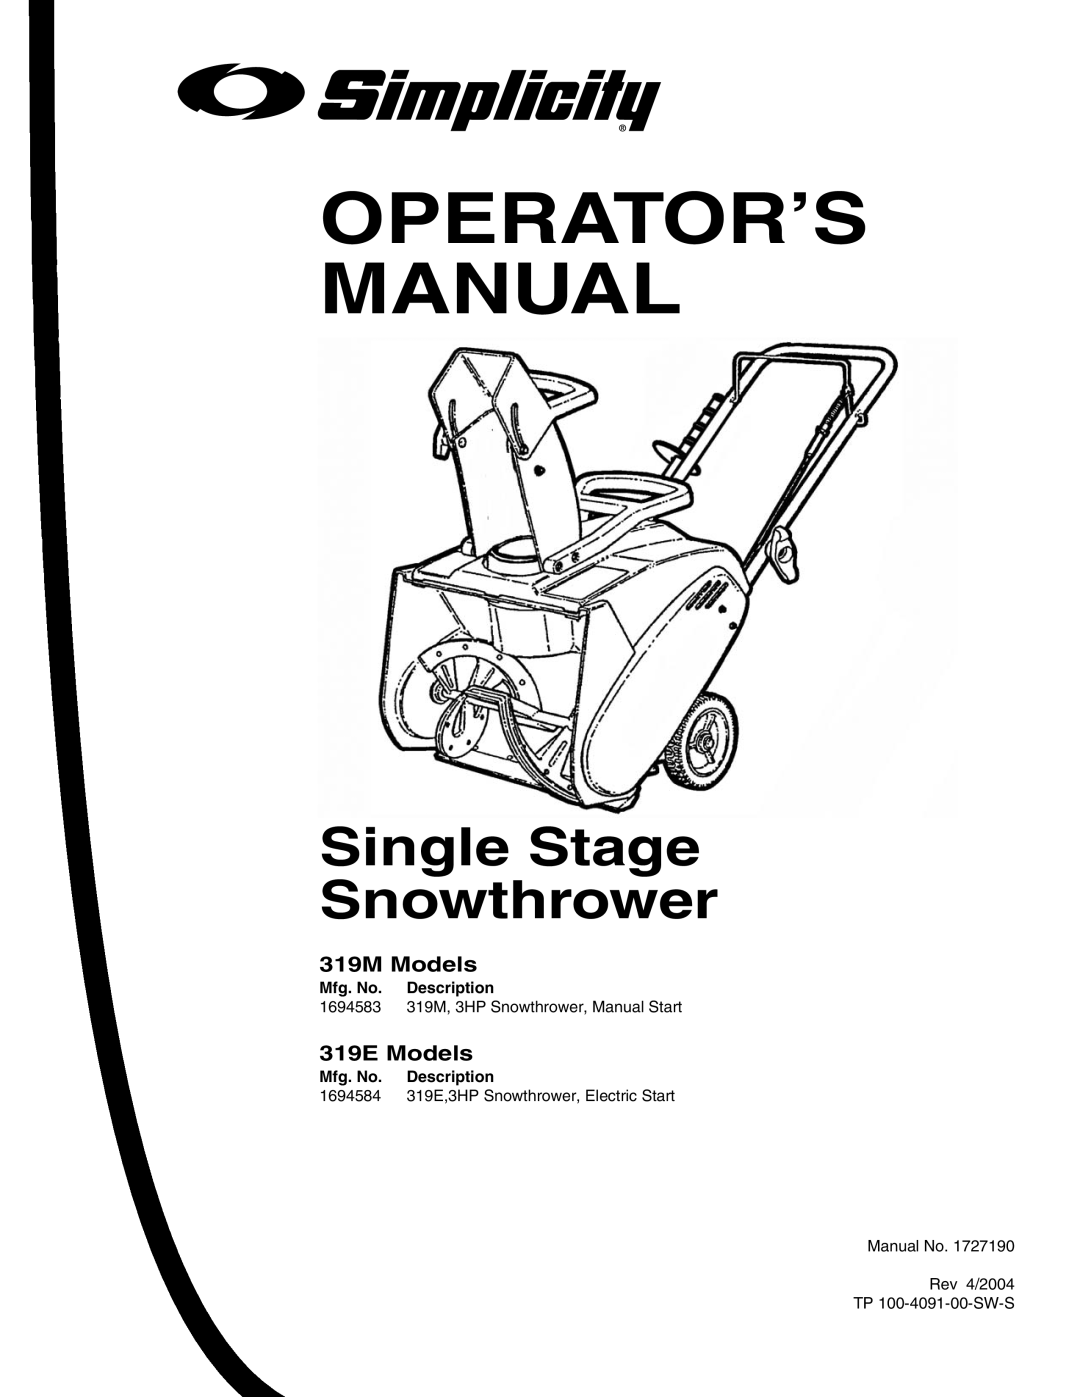 Simplicity 1694583 319M 319M Models, 319E Models, Operator’S Manual, Single Stage Snowthrower, Mfg. No. Description 